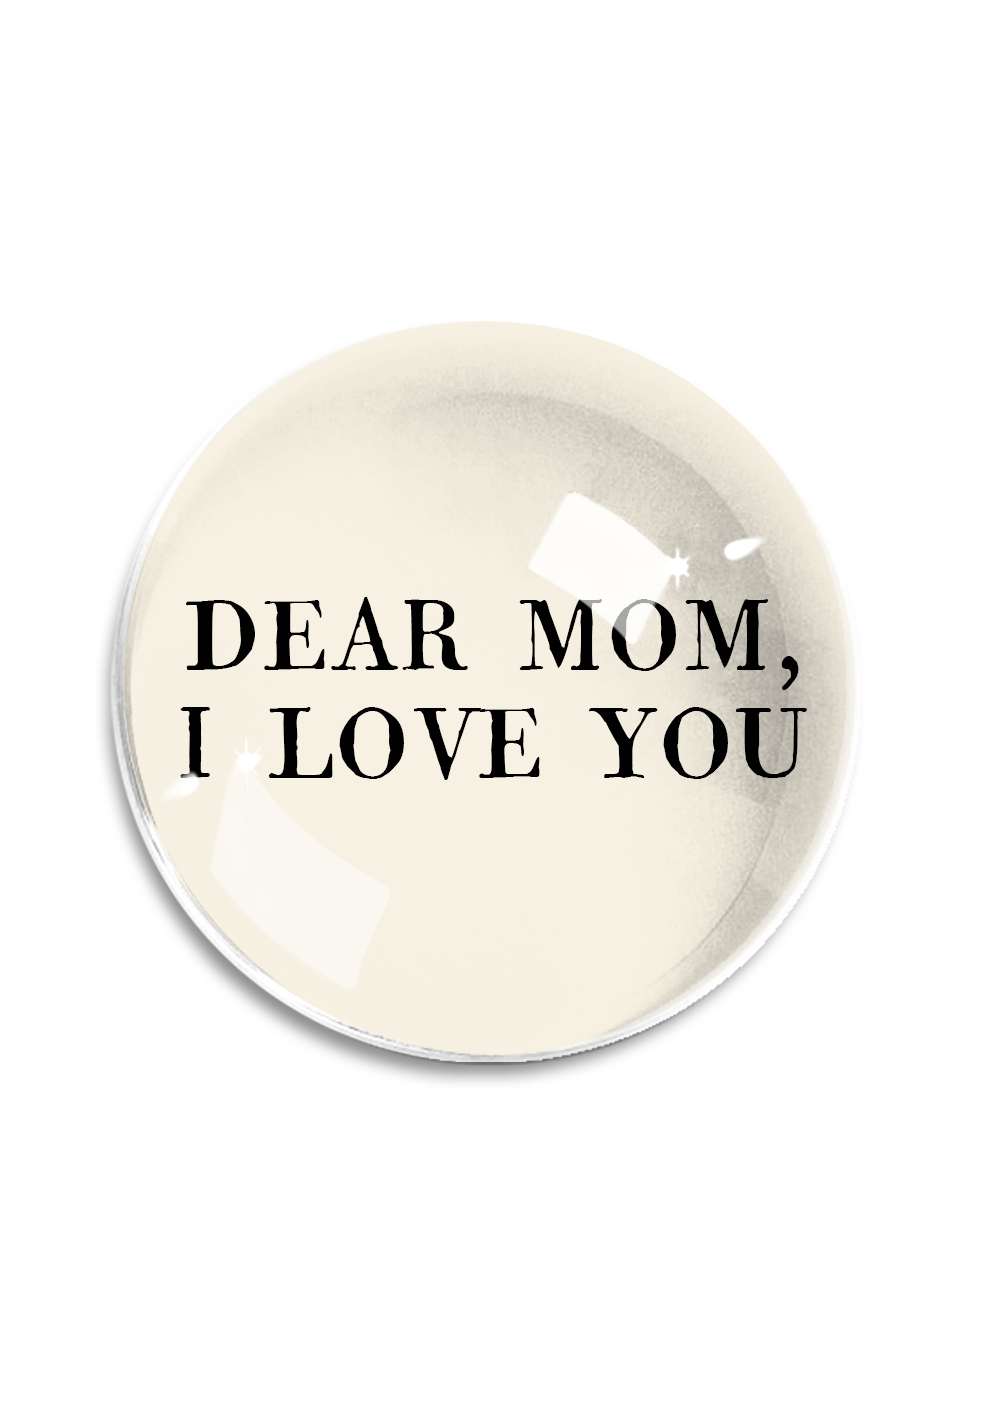 Bensgarden.com | Dear Mom, I Love You Crystal Dome Paperweight - Ben's Garden. Made in New York City.